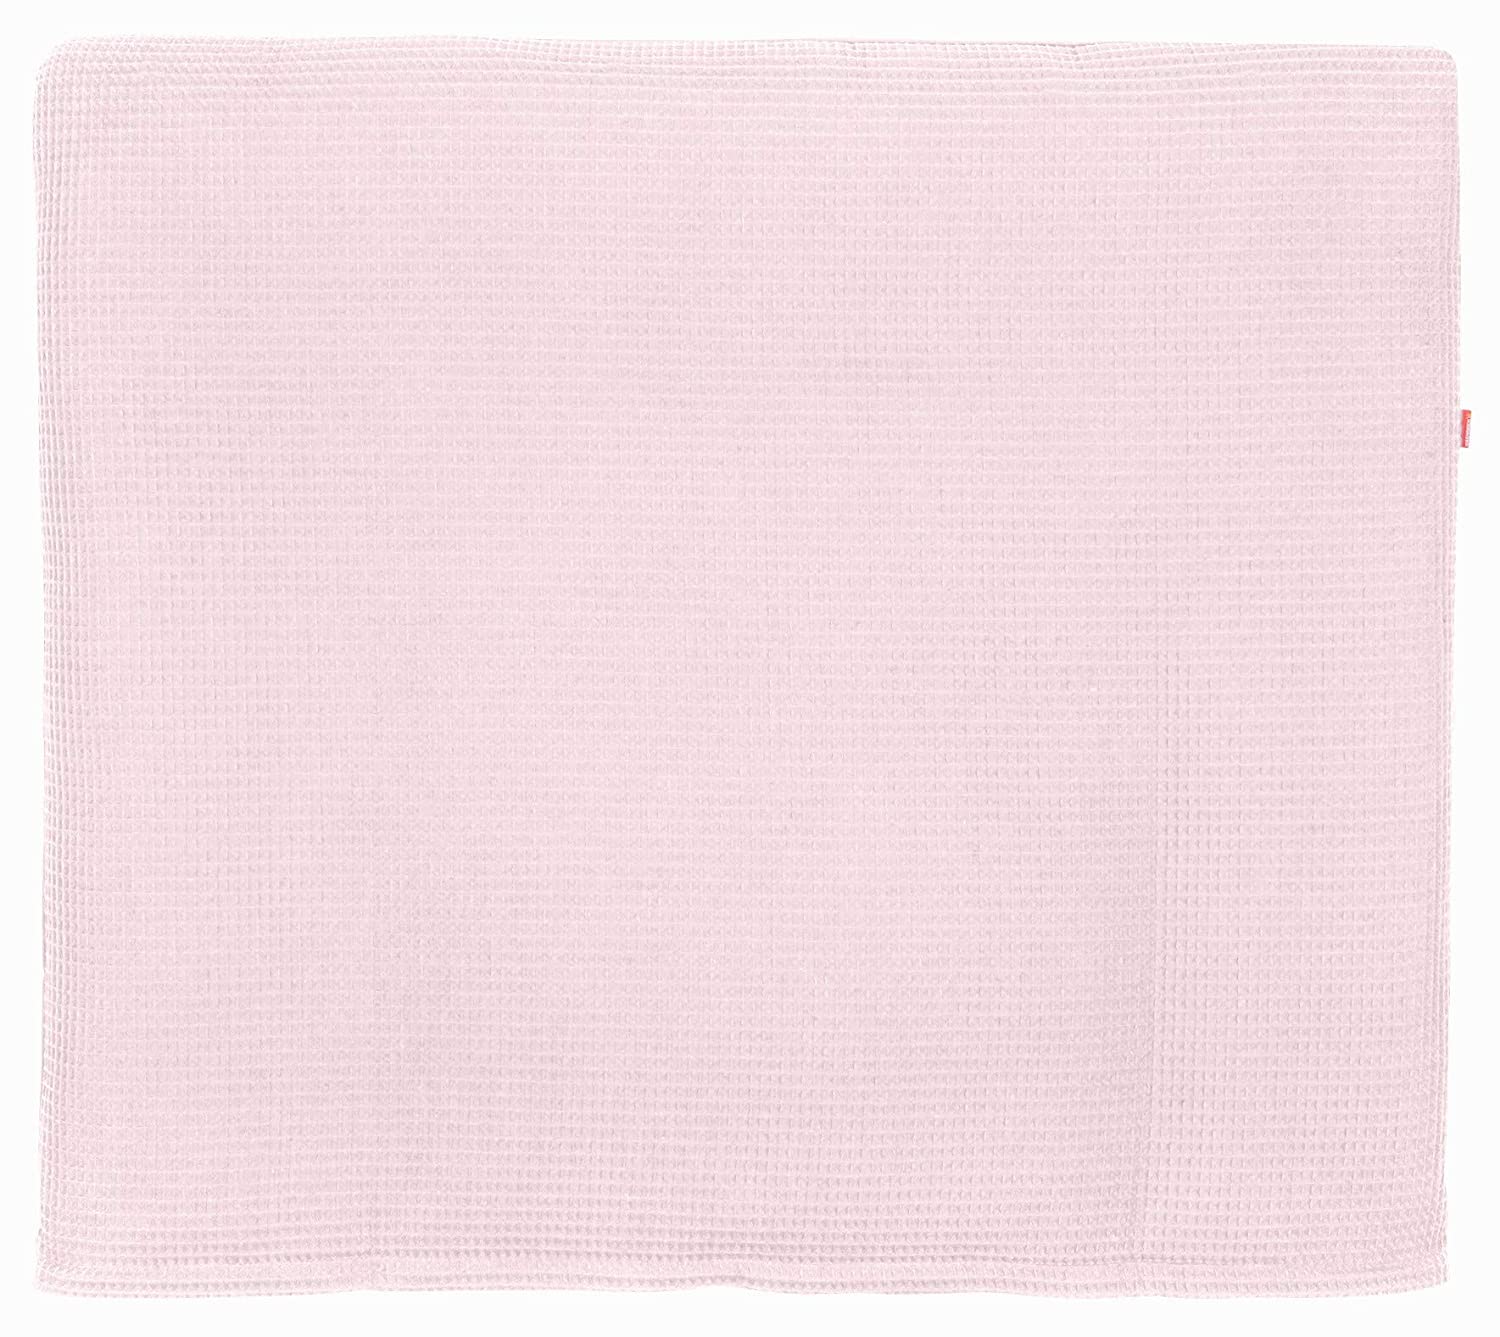 Ideenreich Ideenreich 2476 Changing Mat Cover Pink